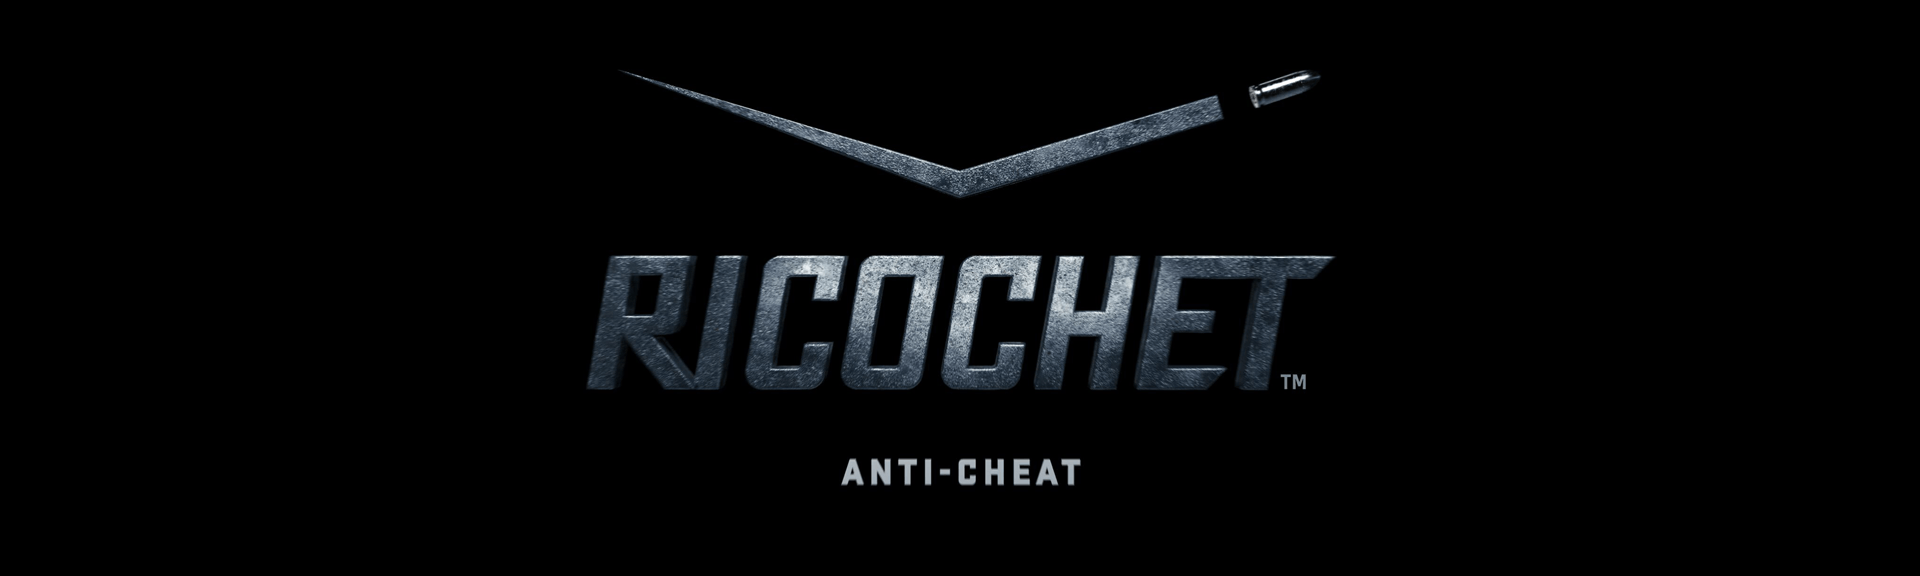 Ricochet Banner